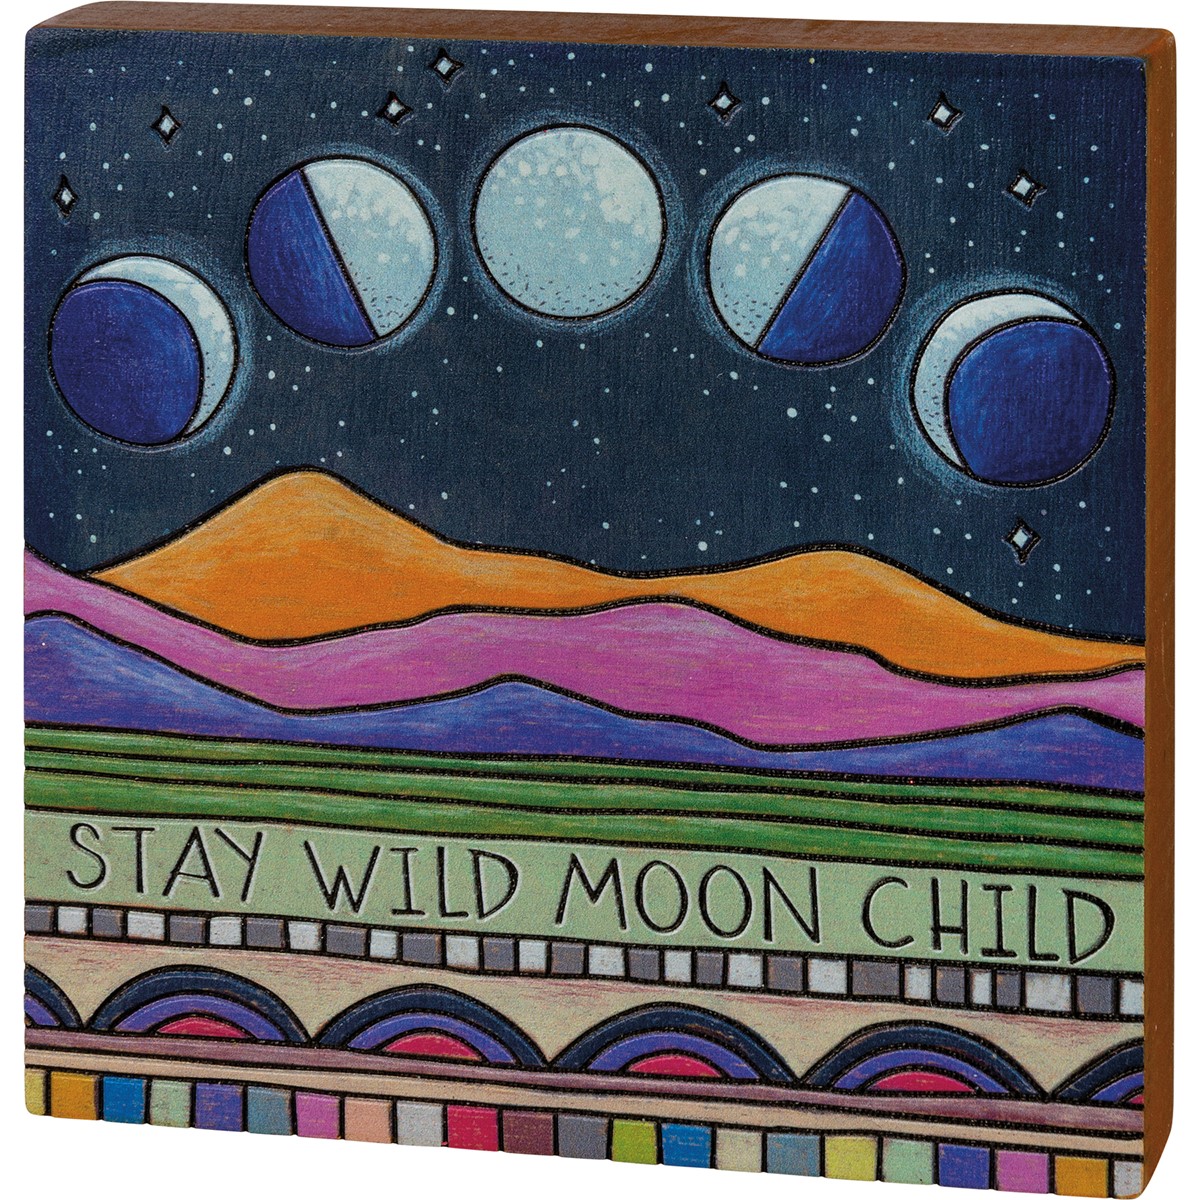 Stay Wild Moon Child Block Sign - Wood